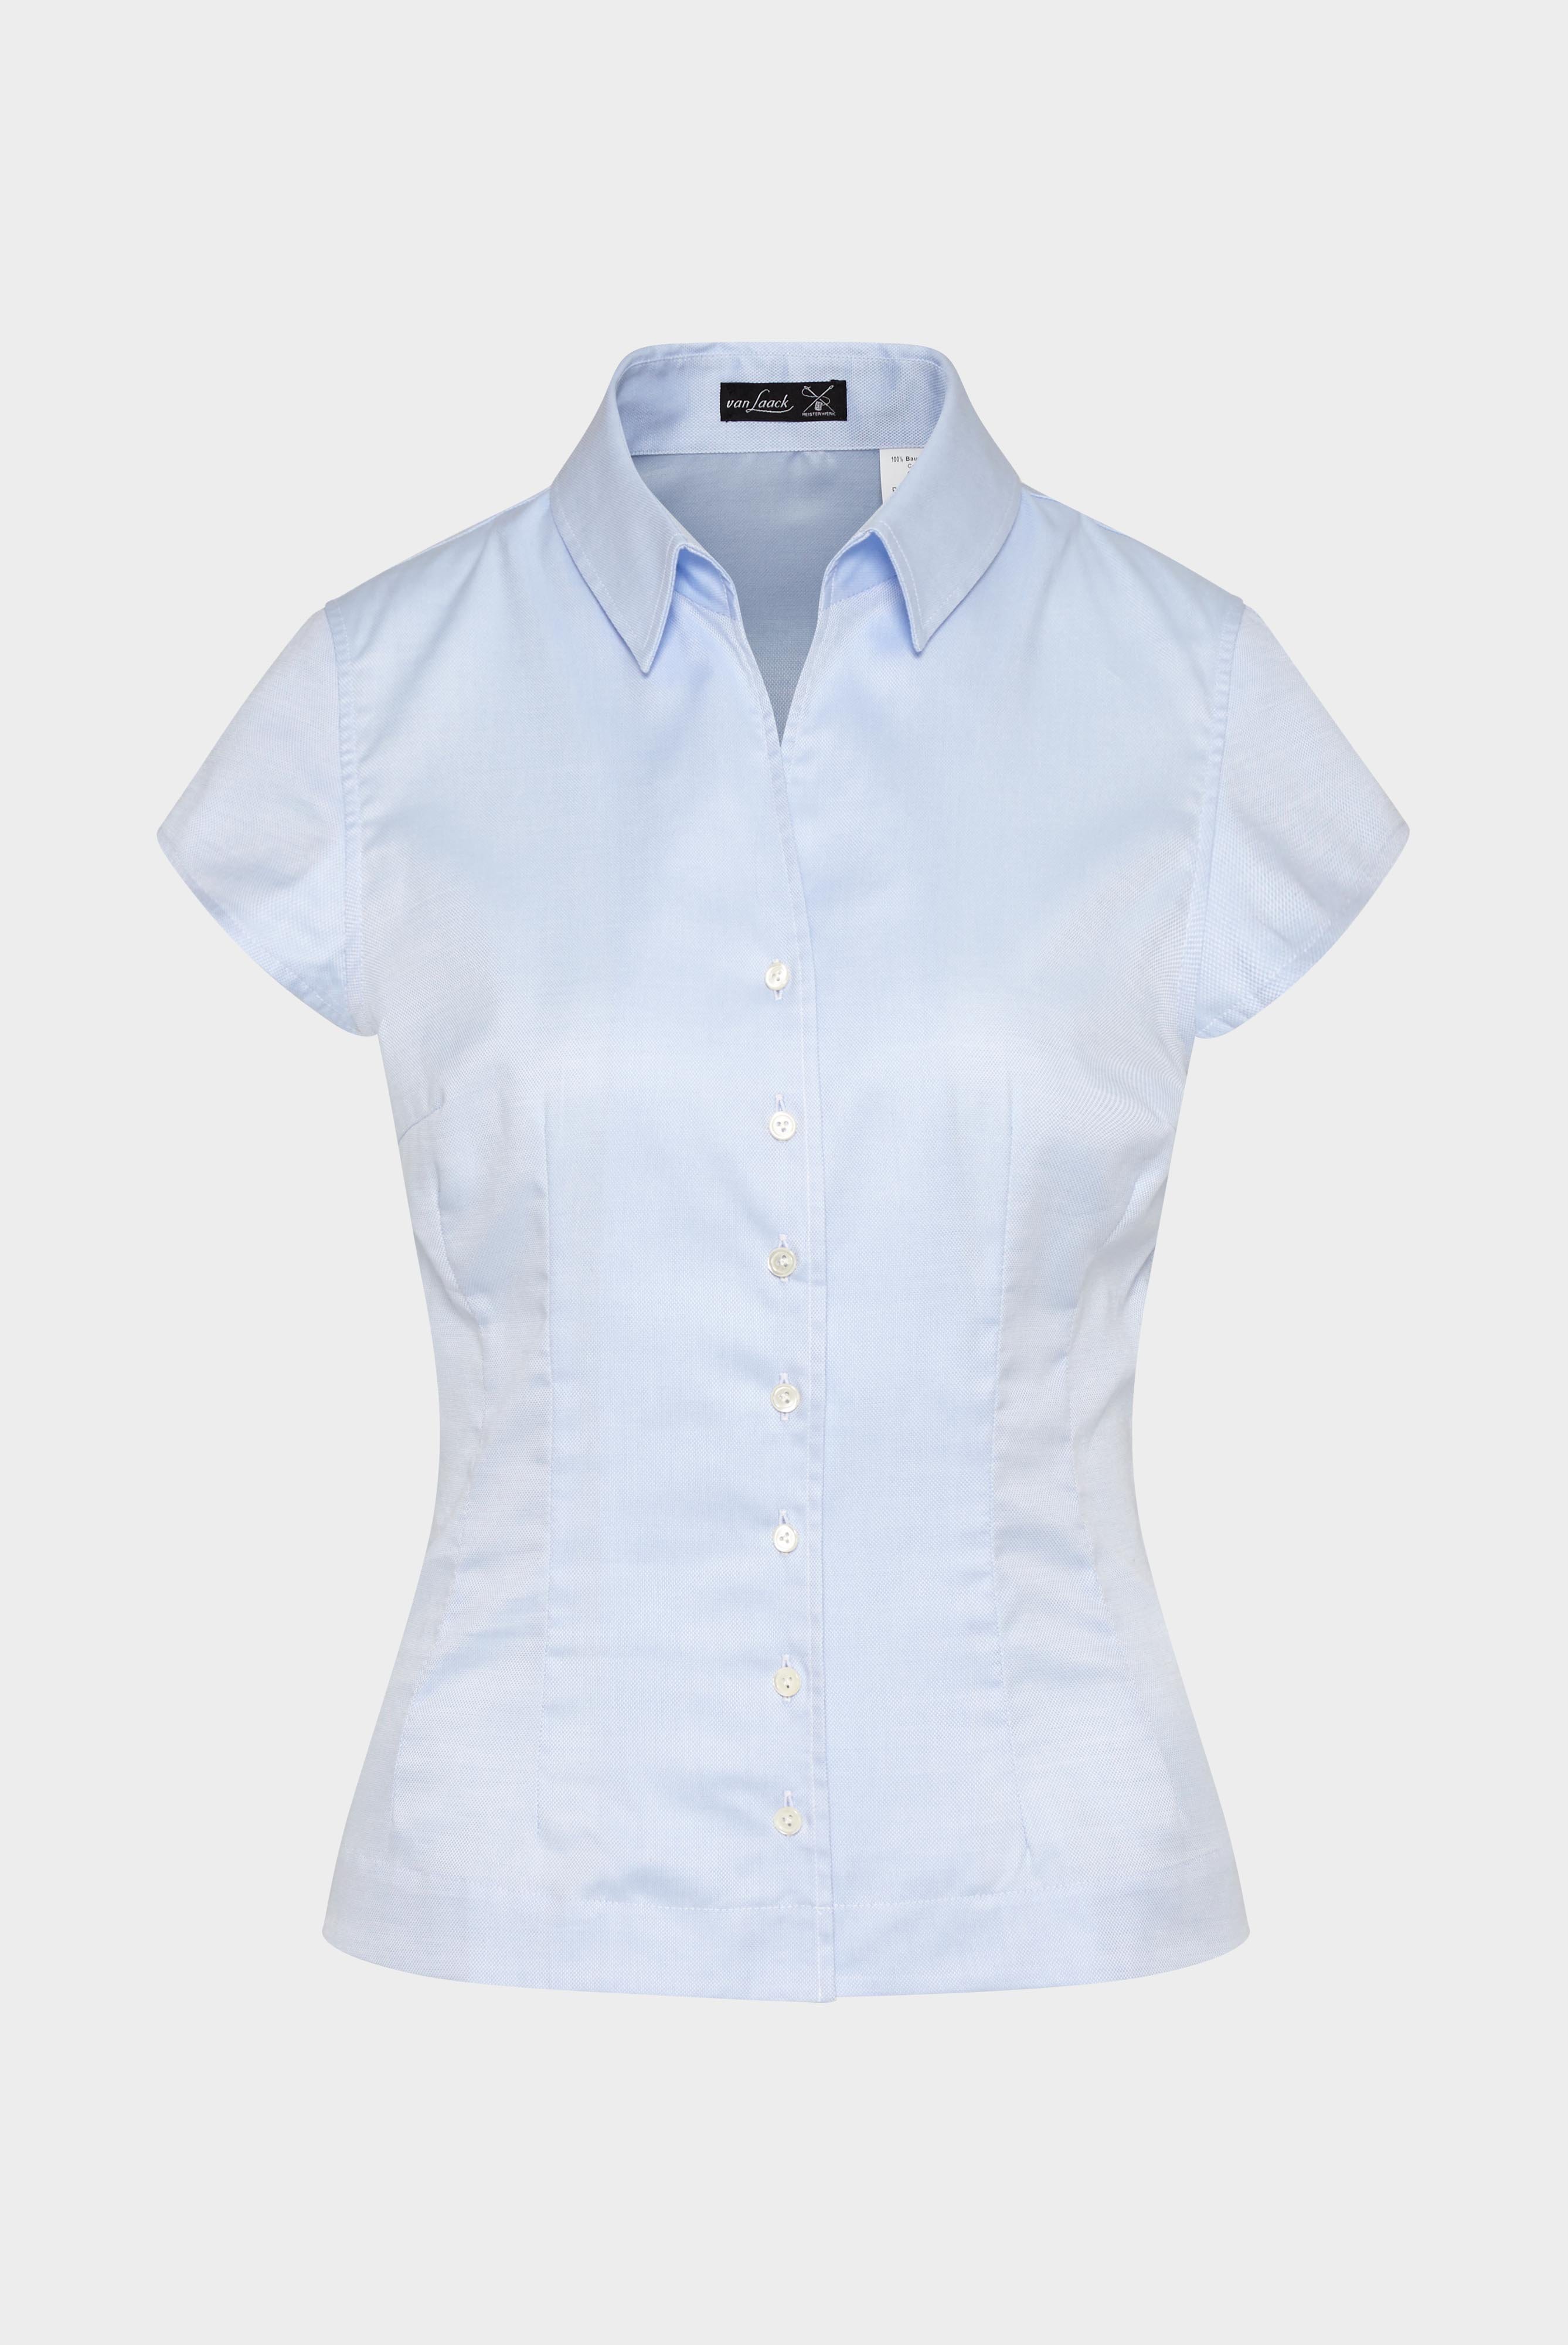 Business Blouses+Natté Short Sleeve Shirt Blouse+05.5029.73.130532.720.32